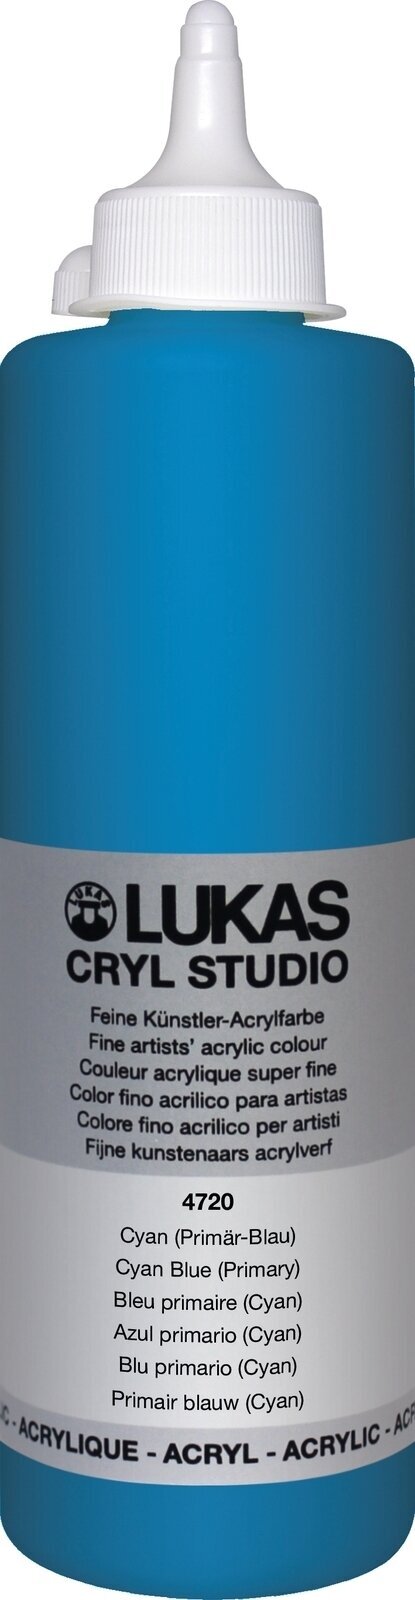 Acrylic Paint Lukas Cryl Studio Acrylic Paint 500 ml Cyan Blue (Primary)